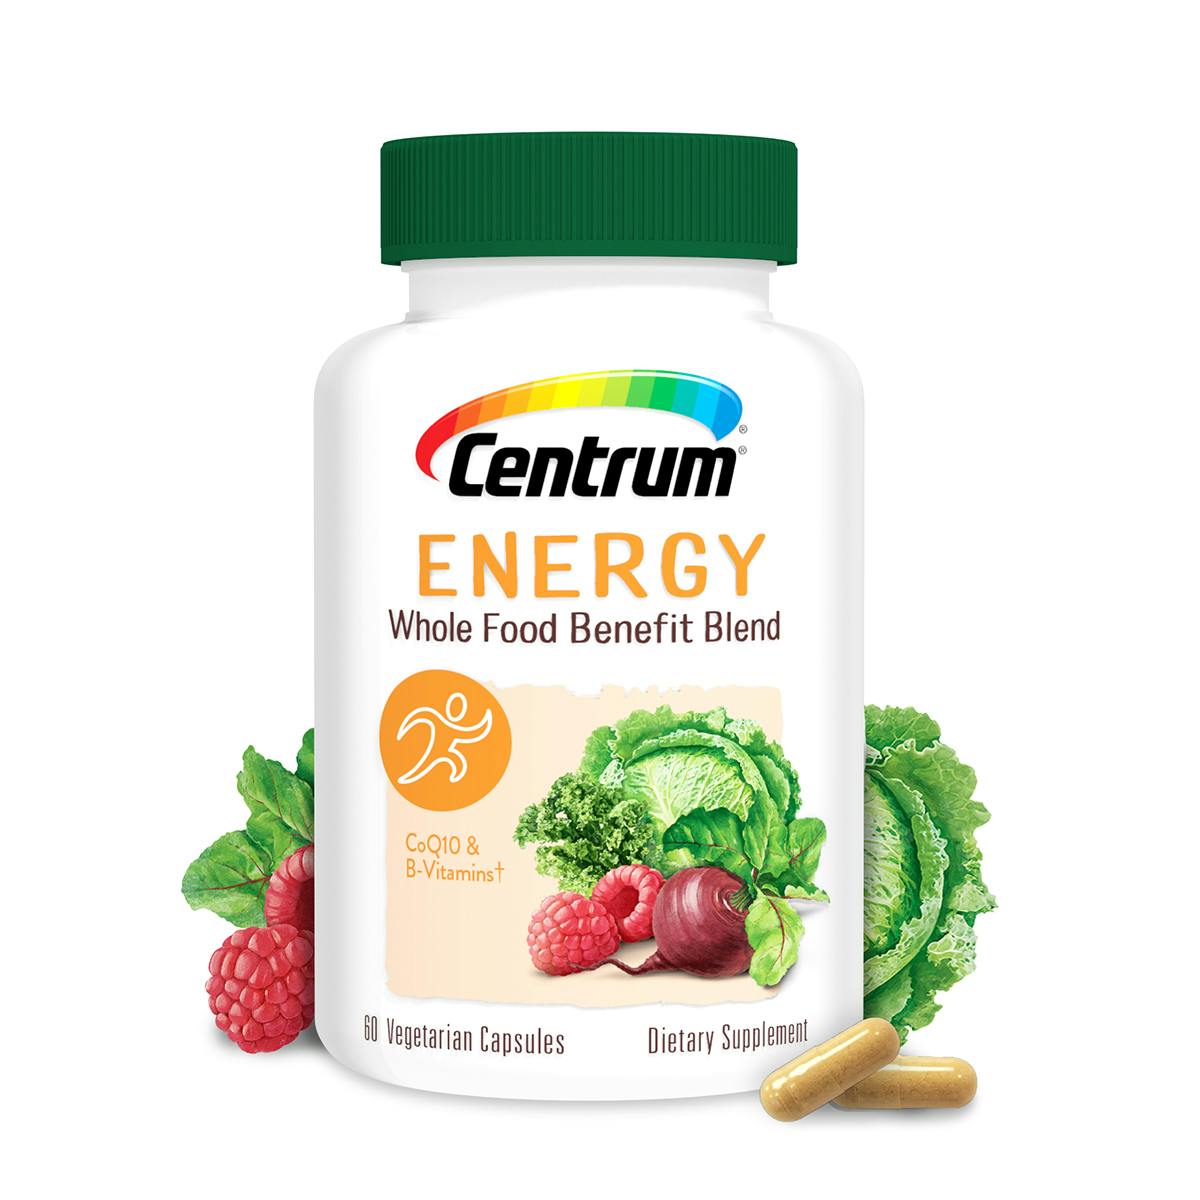 Bottle of Centrum Energy Whole Food Blend Multivitamin